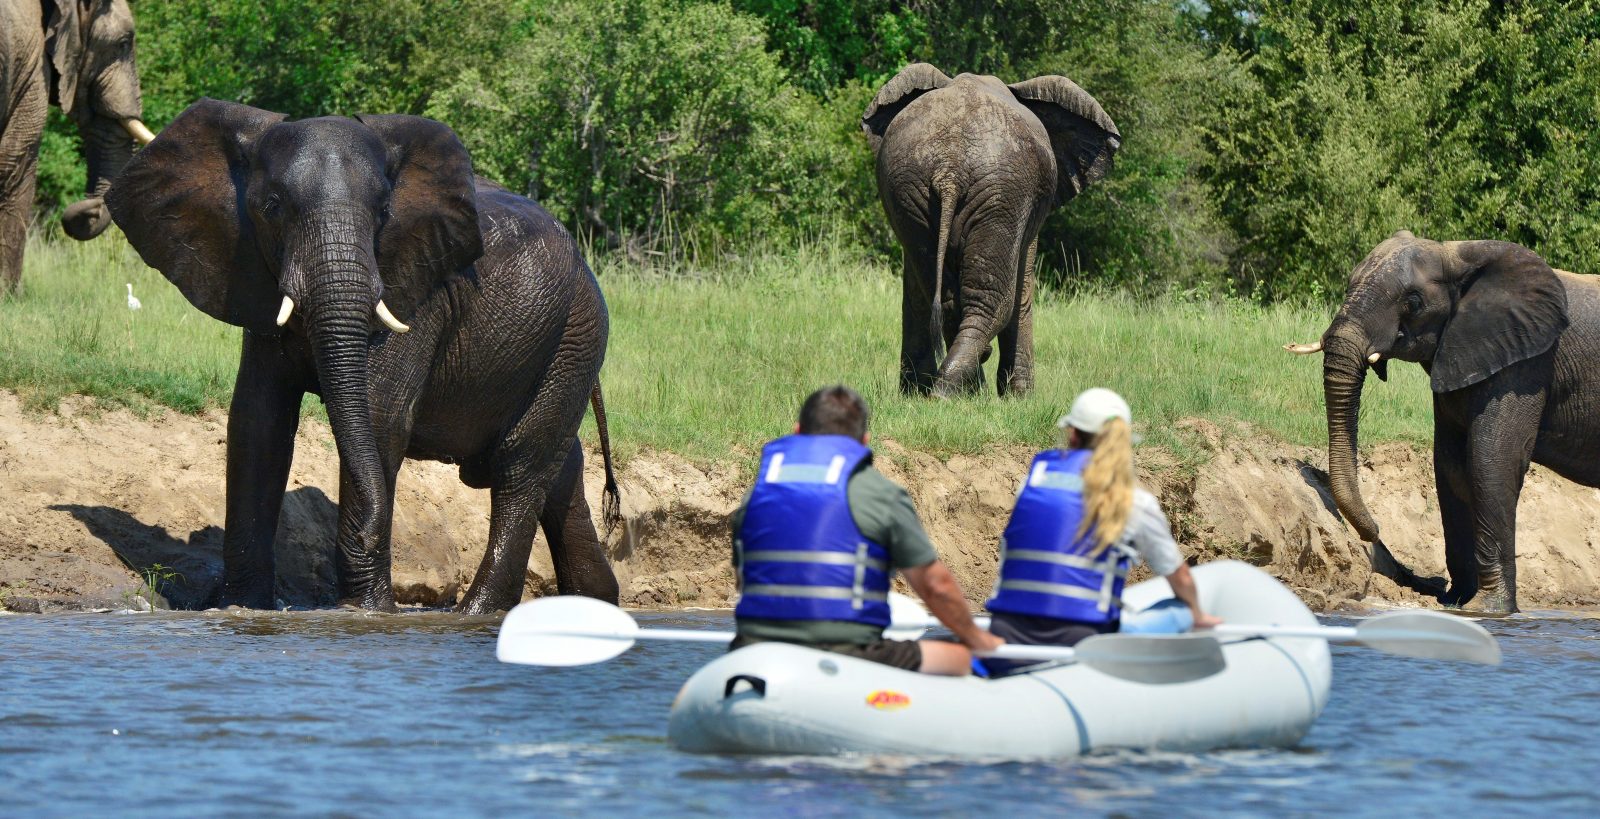 Rafting on the Zambezi near elephants